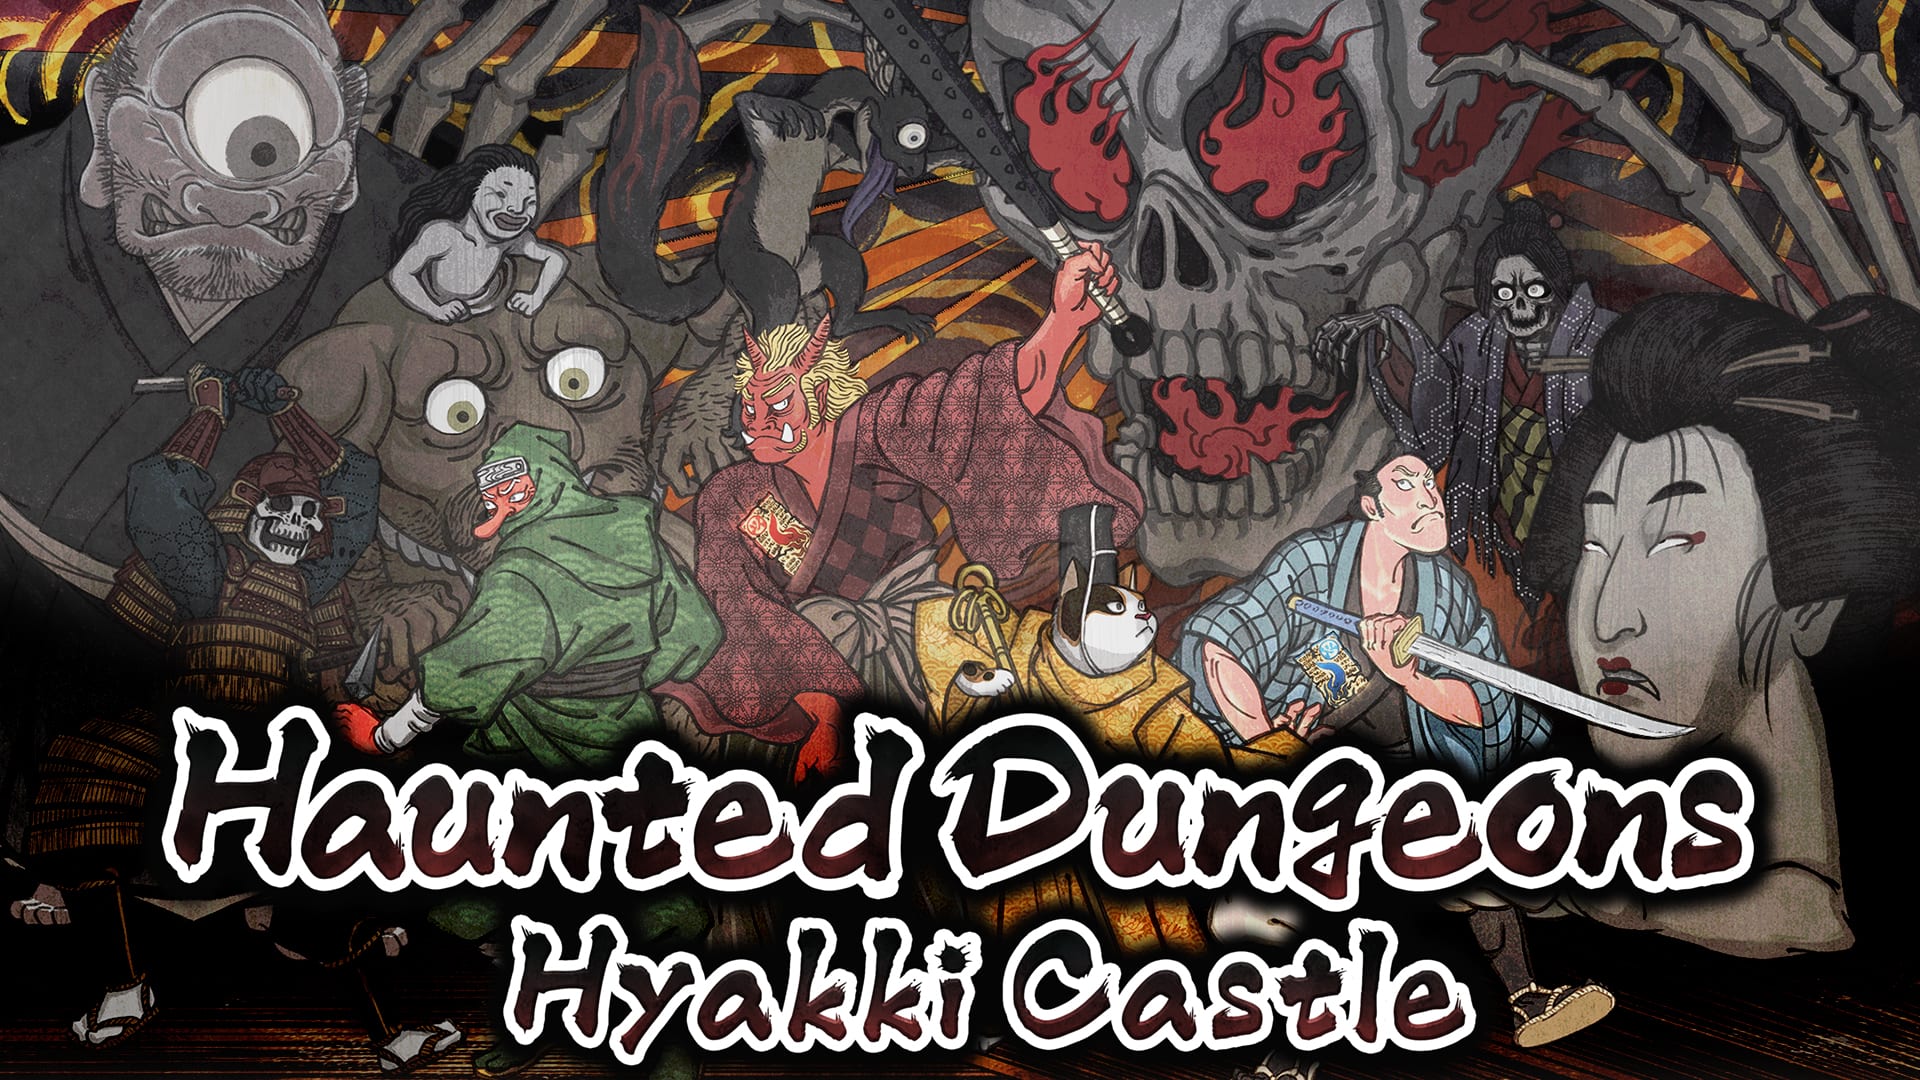 Haunted Dungeons：Hyakki Castle